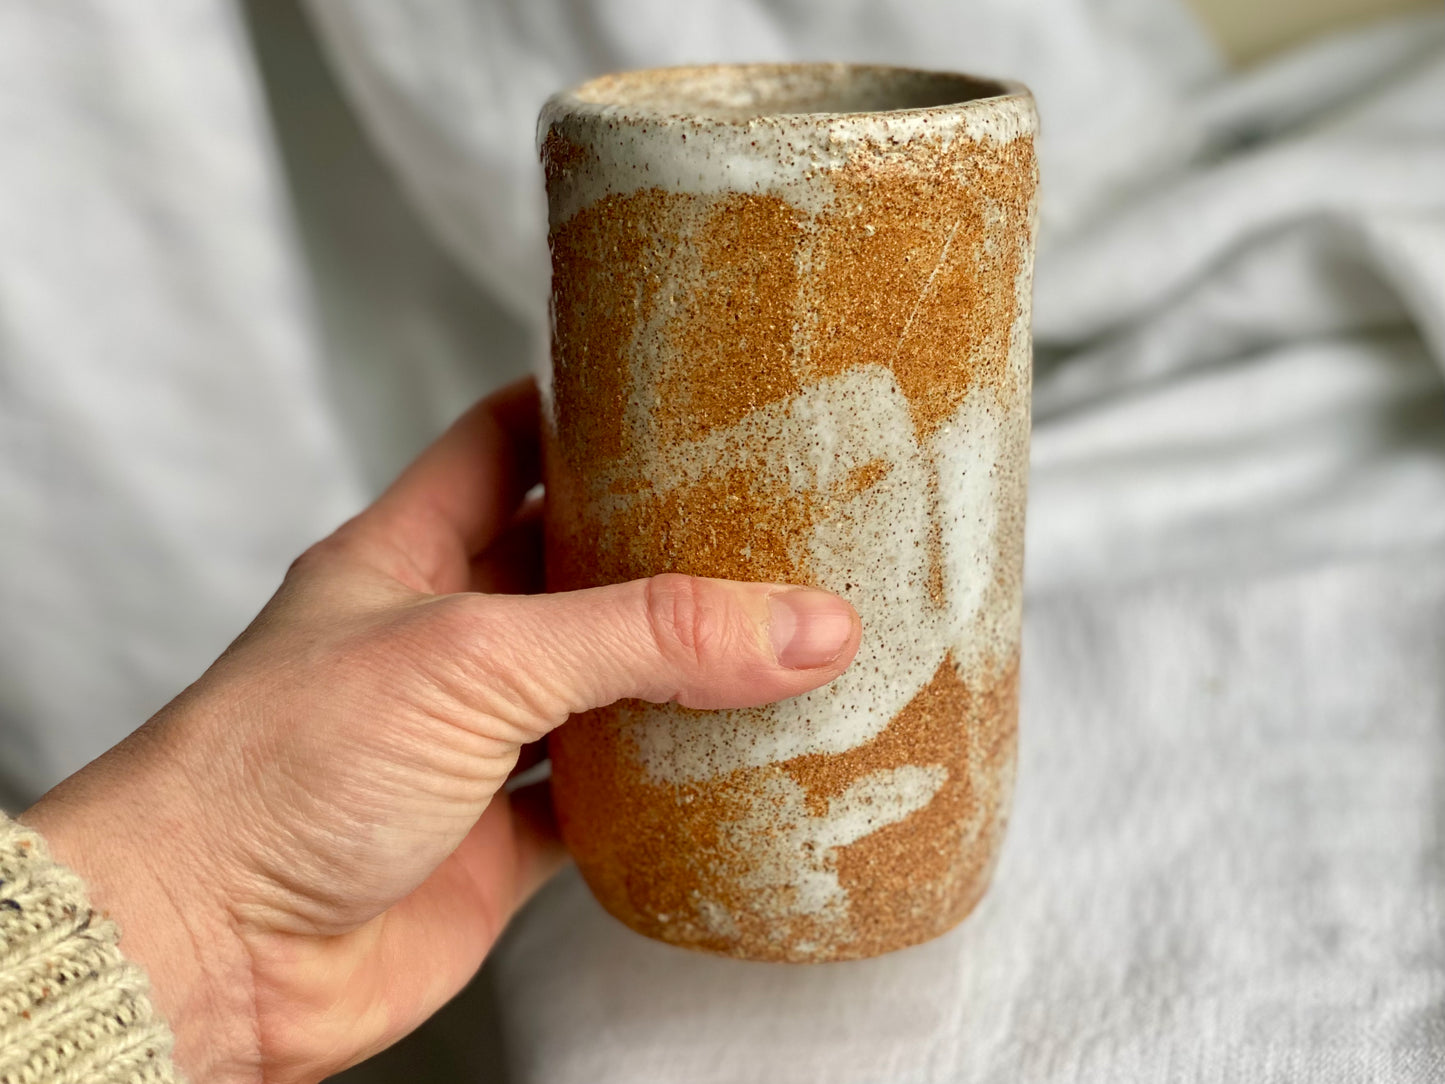 Vase - Medium - Sandy clay - Brushed Gloss White